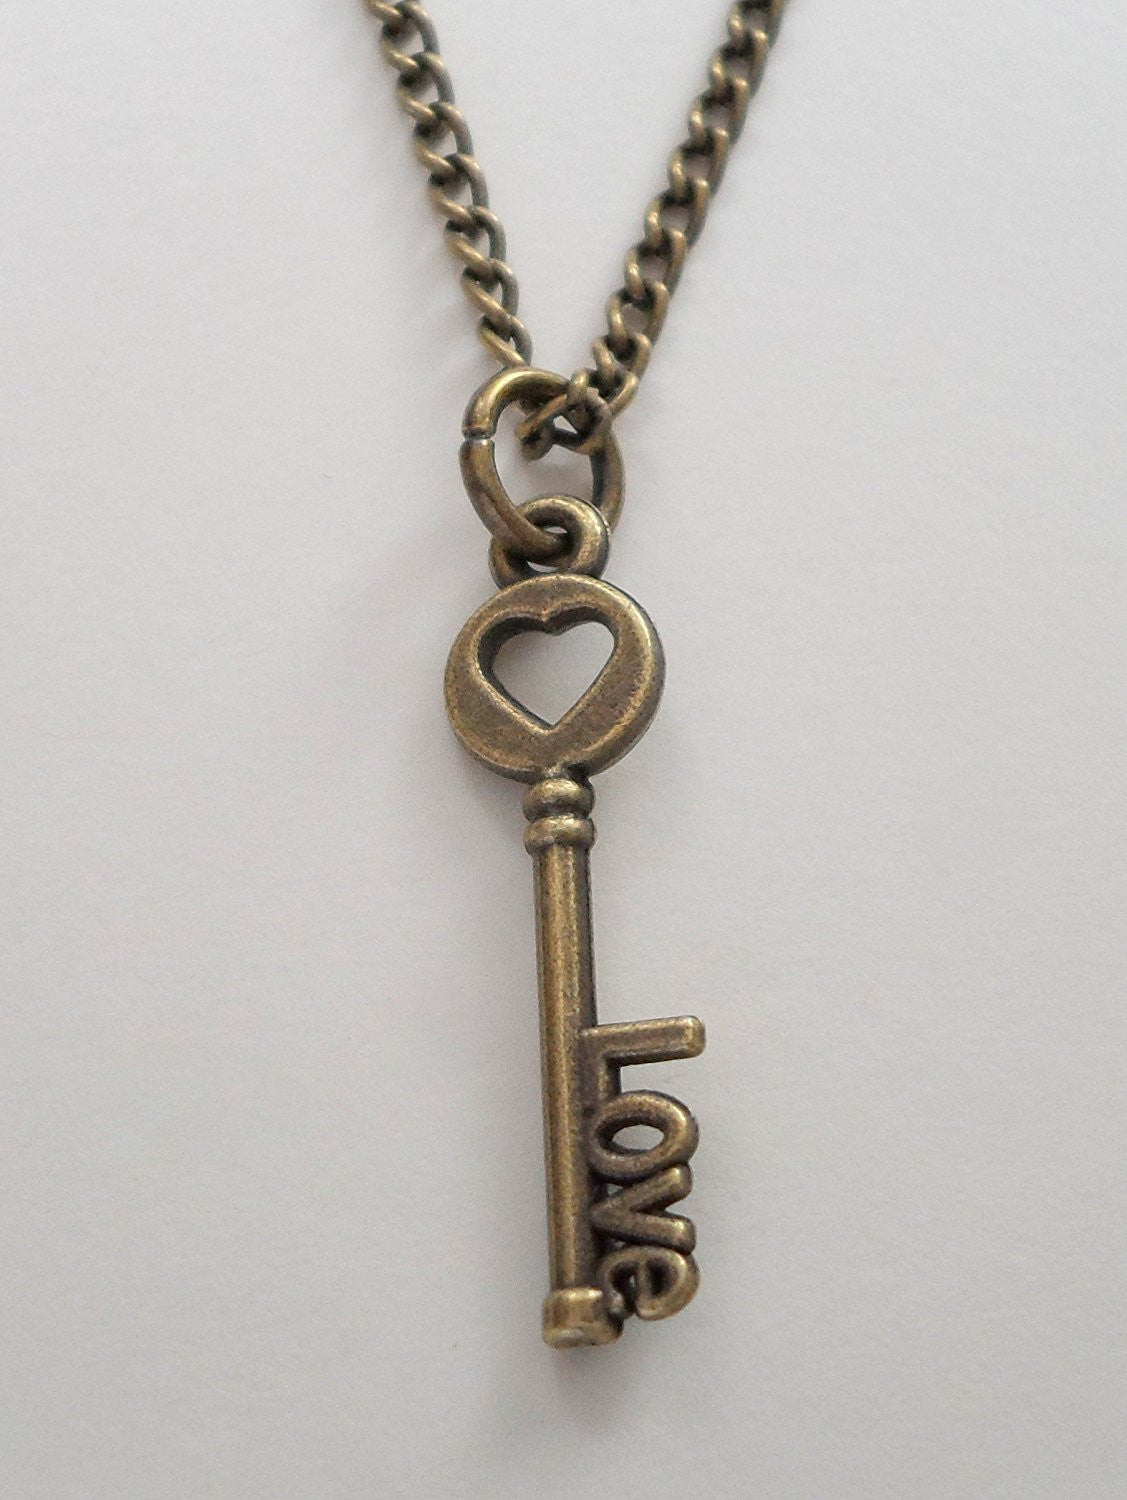 Bronze Key Necklace - You've Got The Key To My Heart – JewelryEveryday